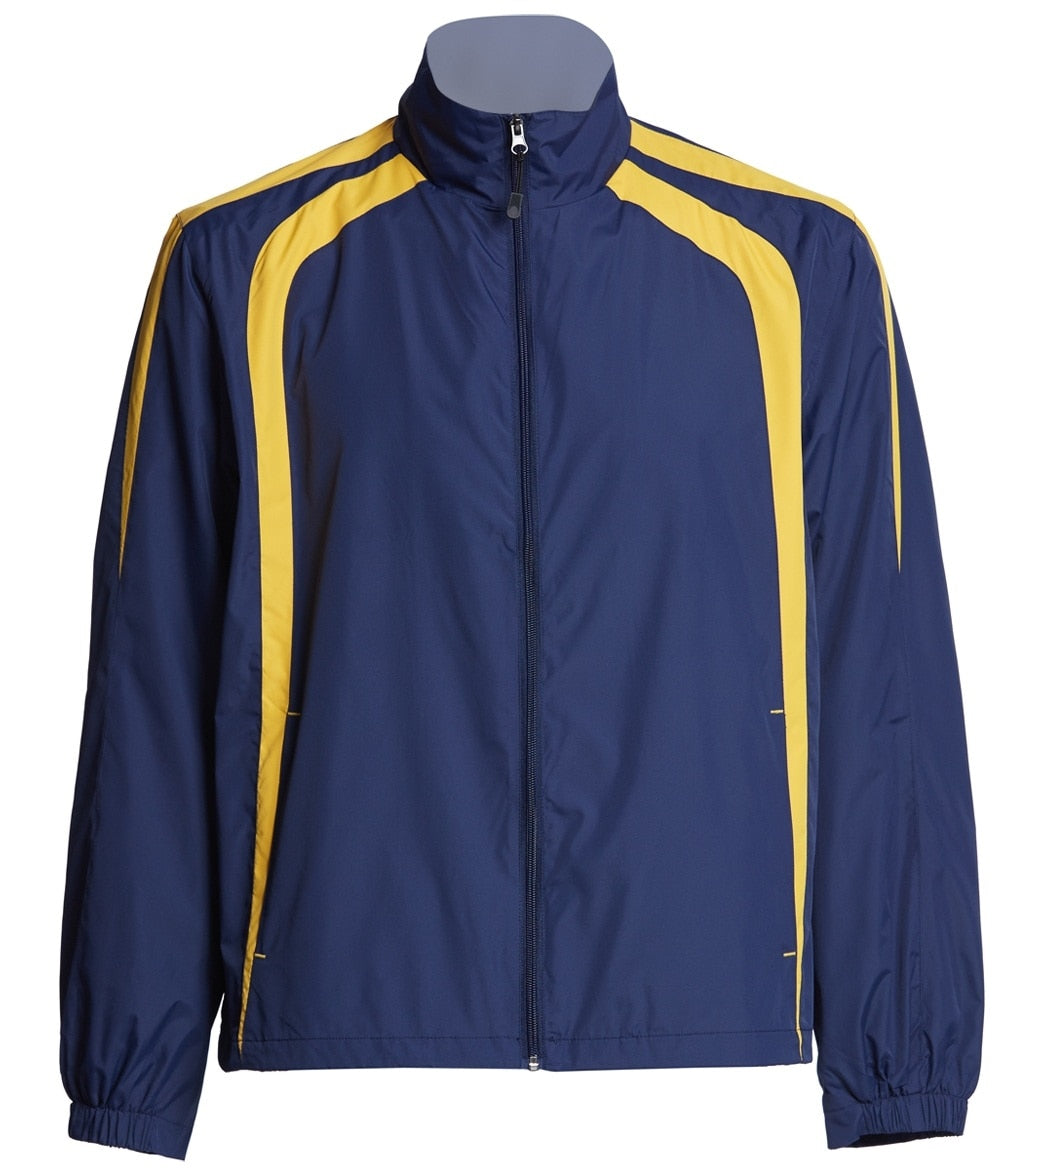 Men's Warm Up Jacket - True Navy/Gold Large Polyester - Swimoutlet.com